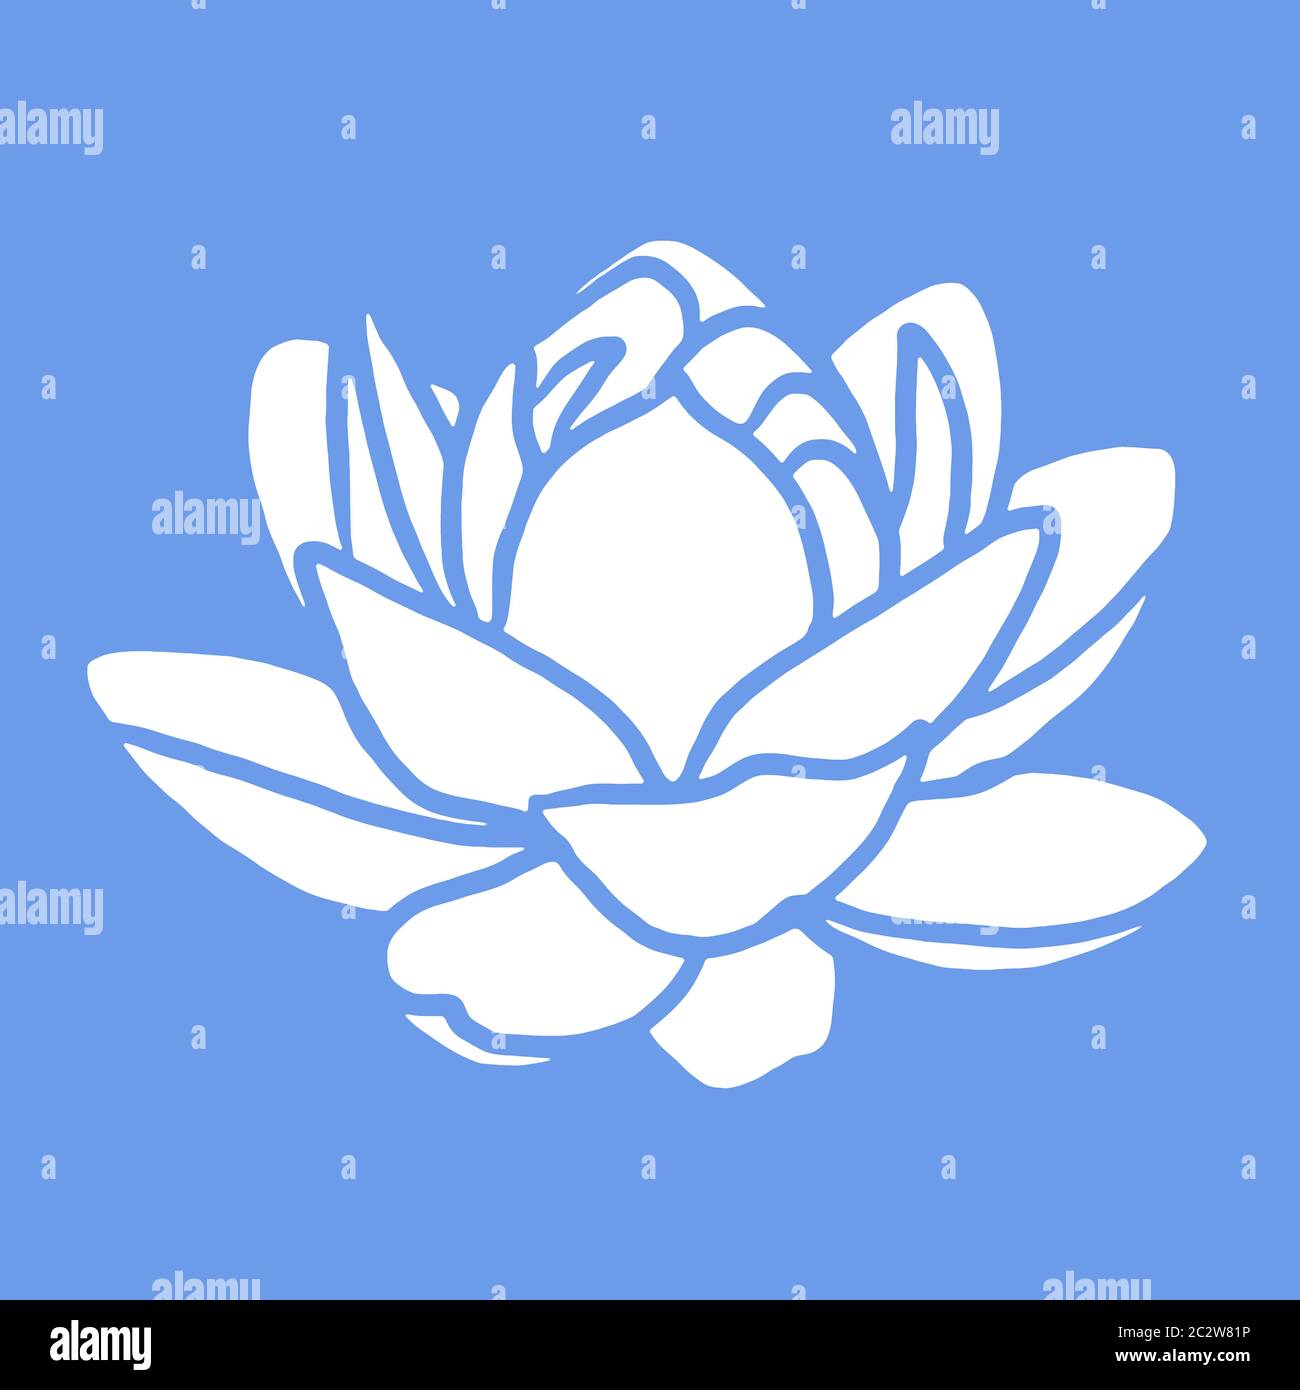 un moderno design di fiori di loto blu e bianco Foto Stock